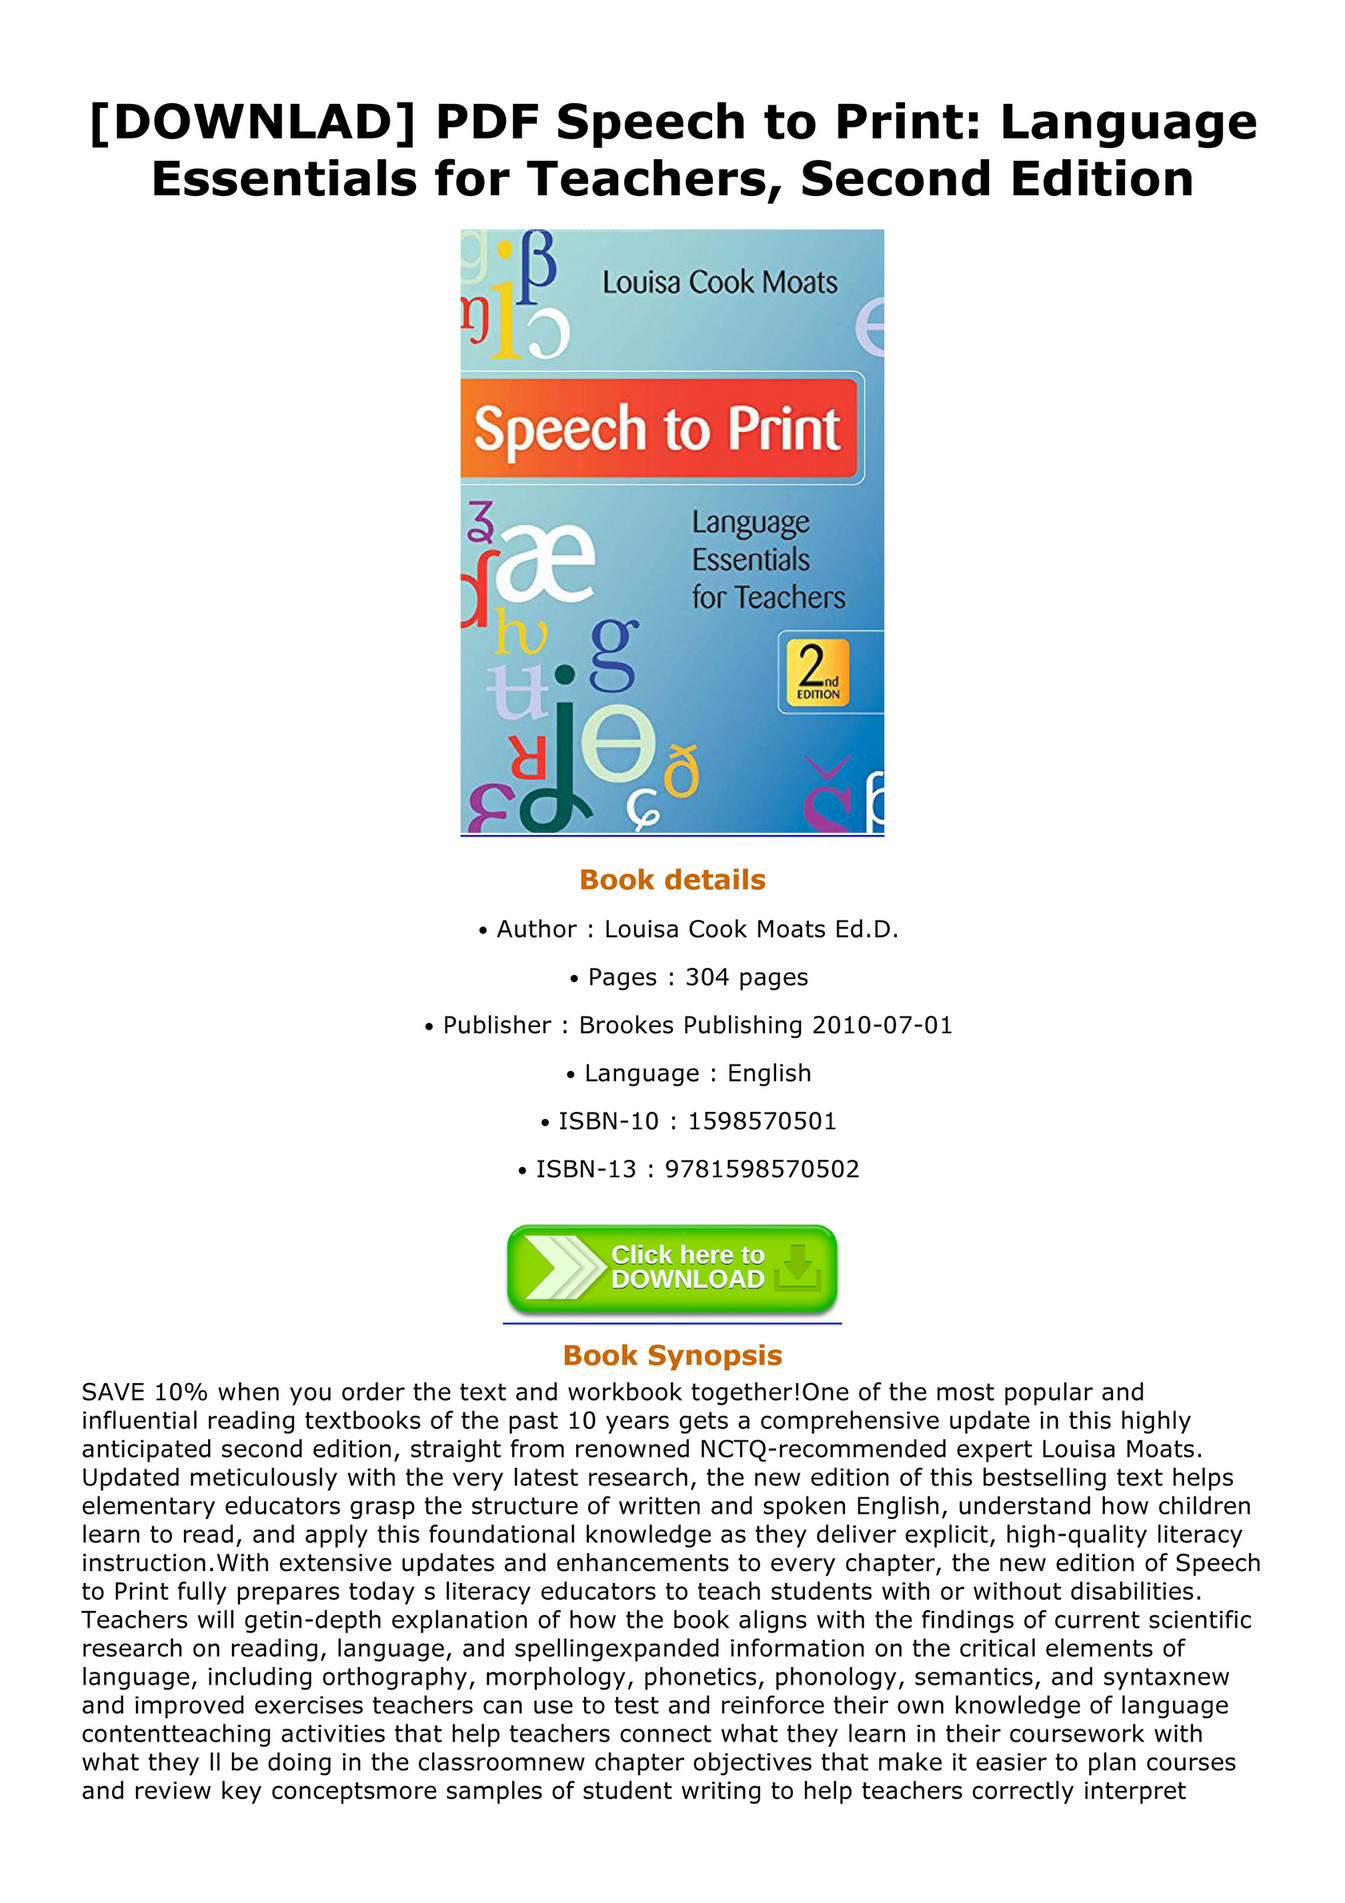 Thurman Downlad Pdf Speech To Print Language Essentials For Teachers Second Edition Page 1